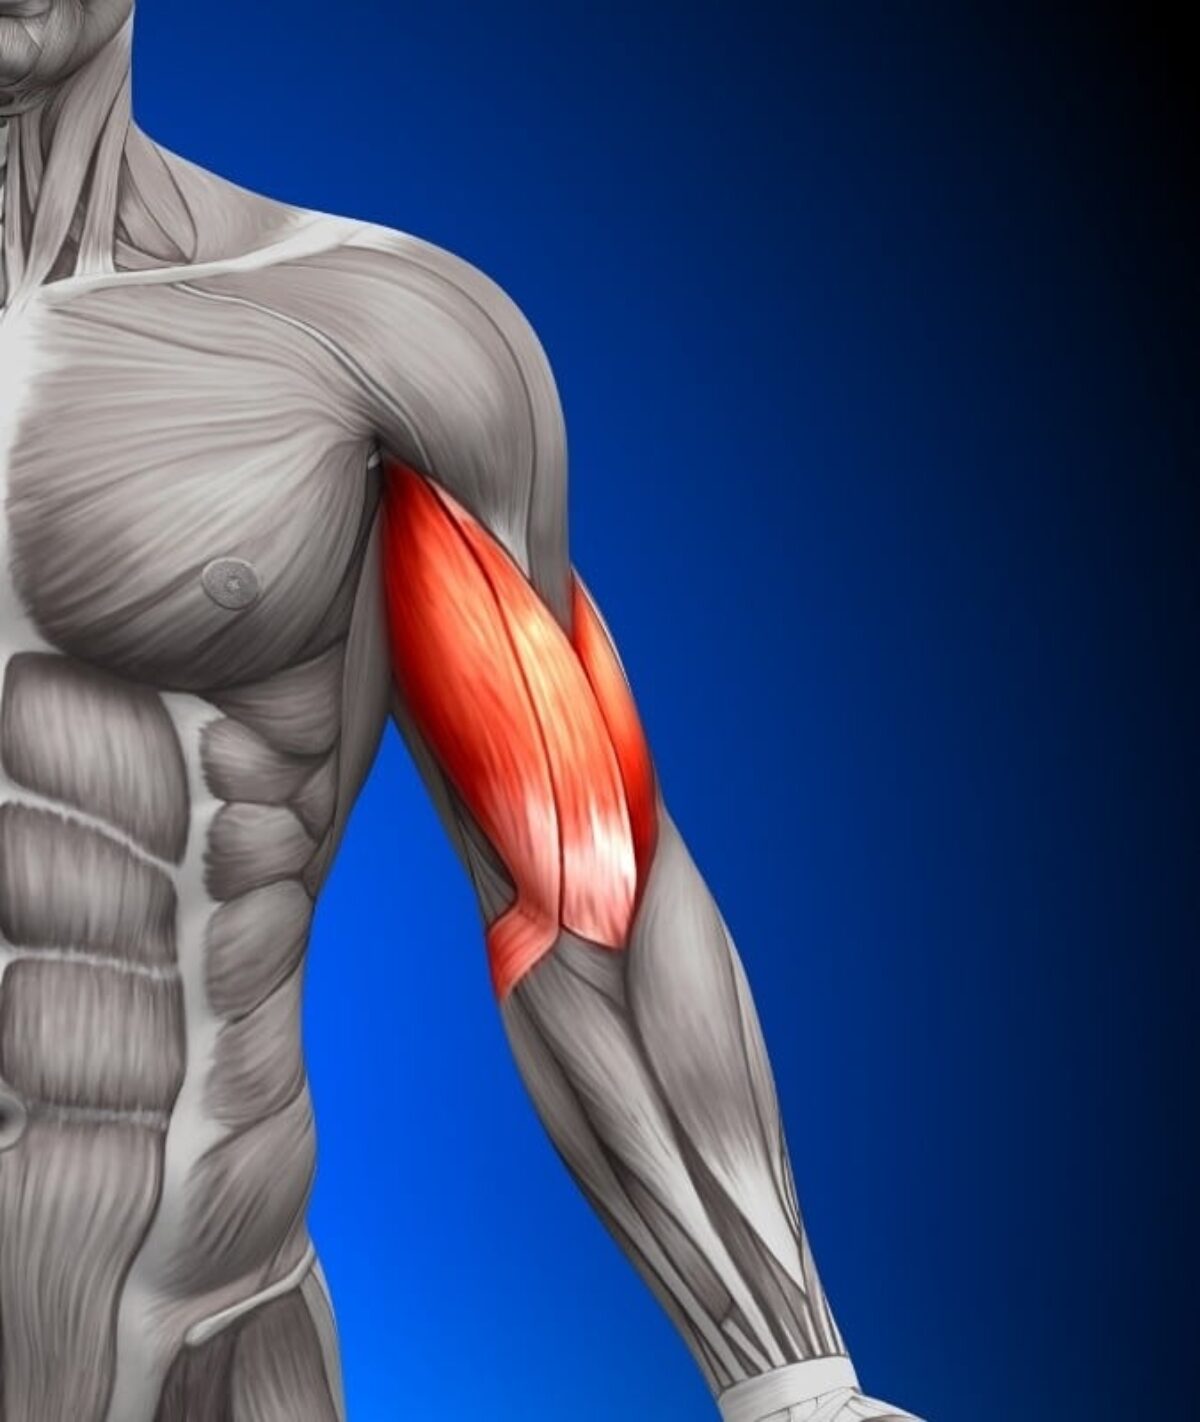 Biceps Anatomy 3d Model Ad Bicepsanatomymodel In 2020